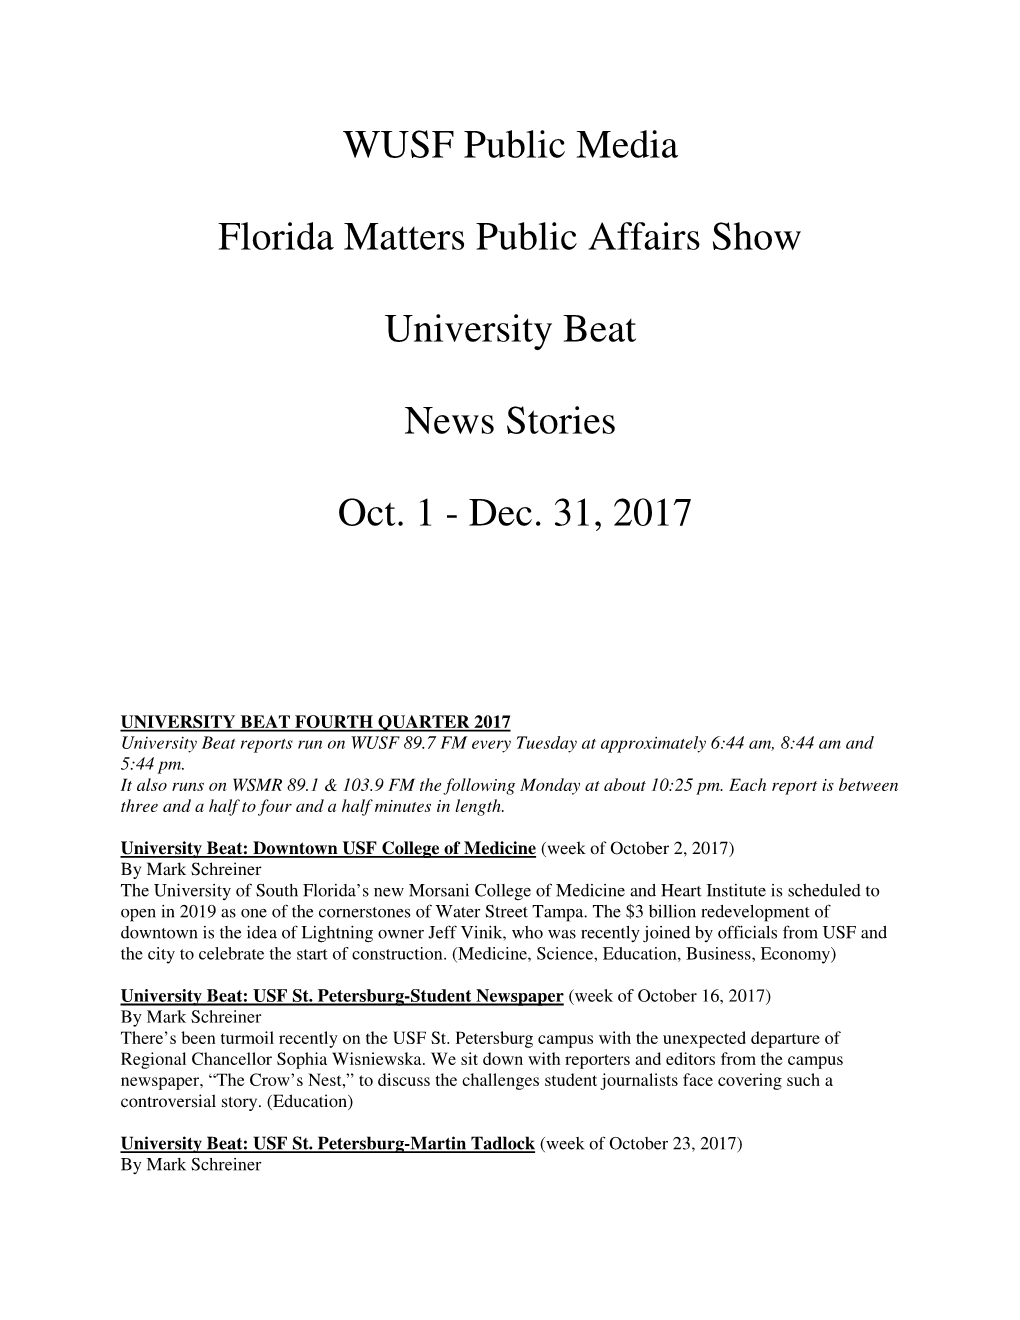 WUSF Public Media Florida Matters Public Affairs Show University Beat